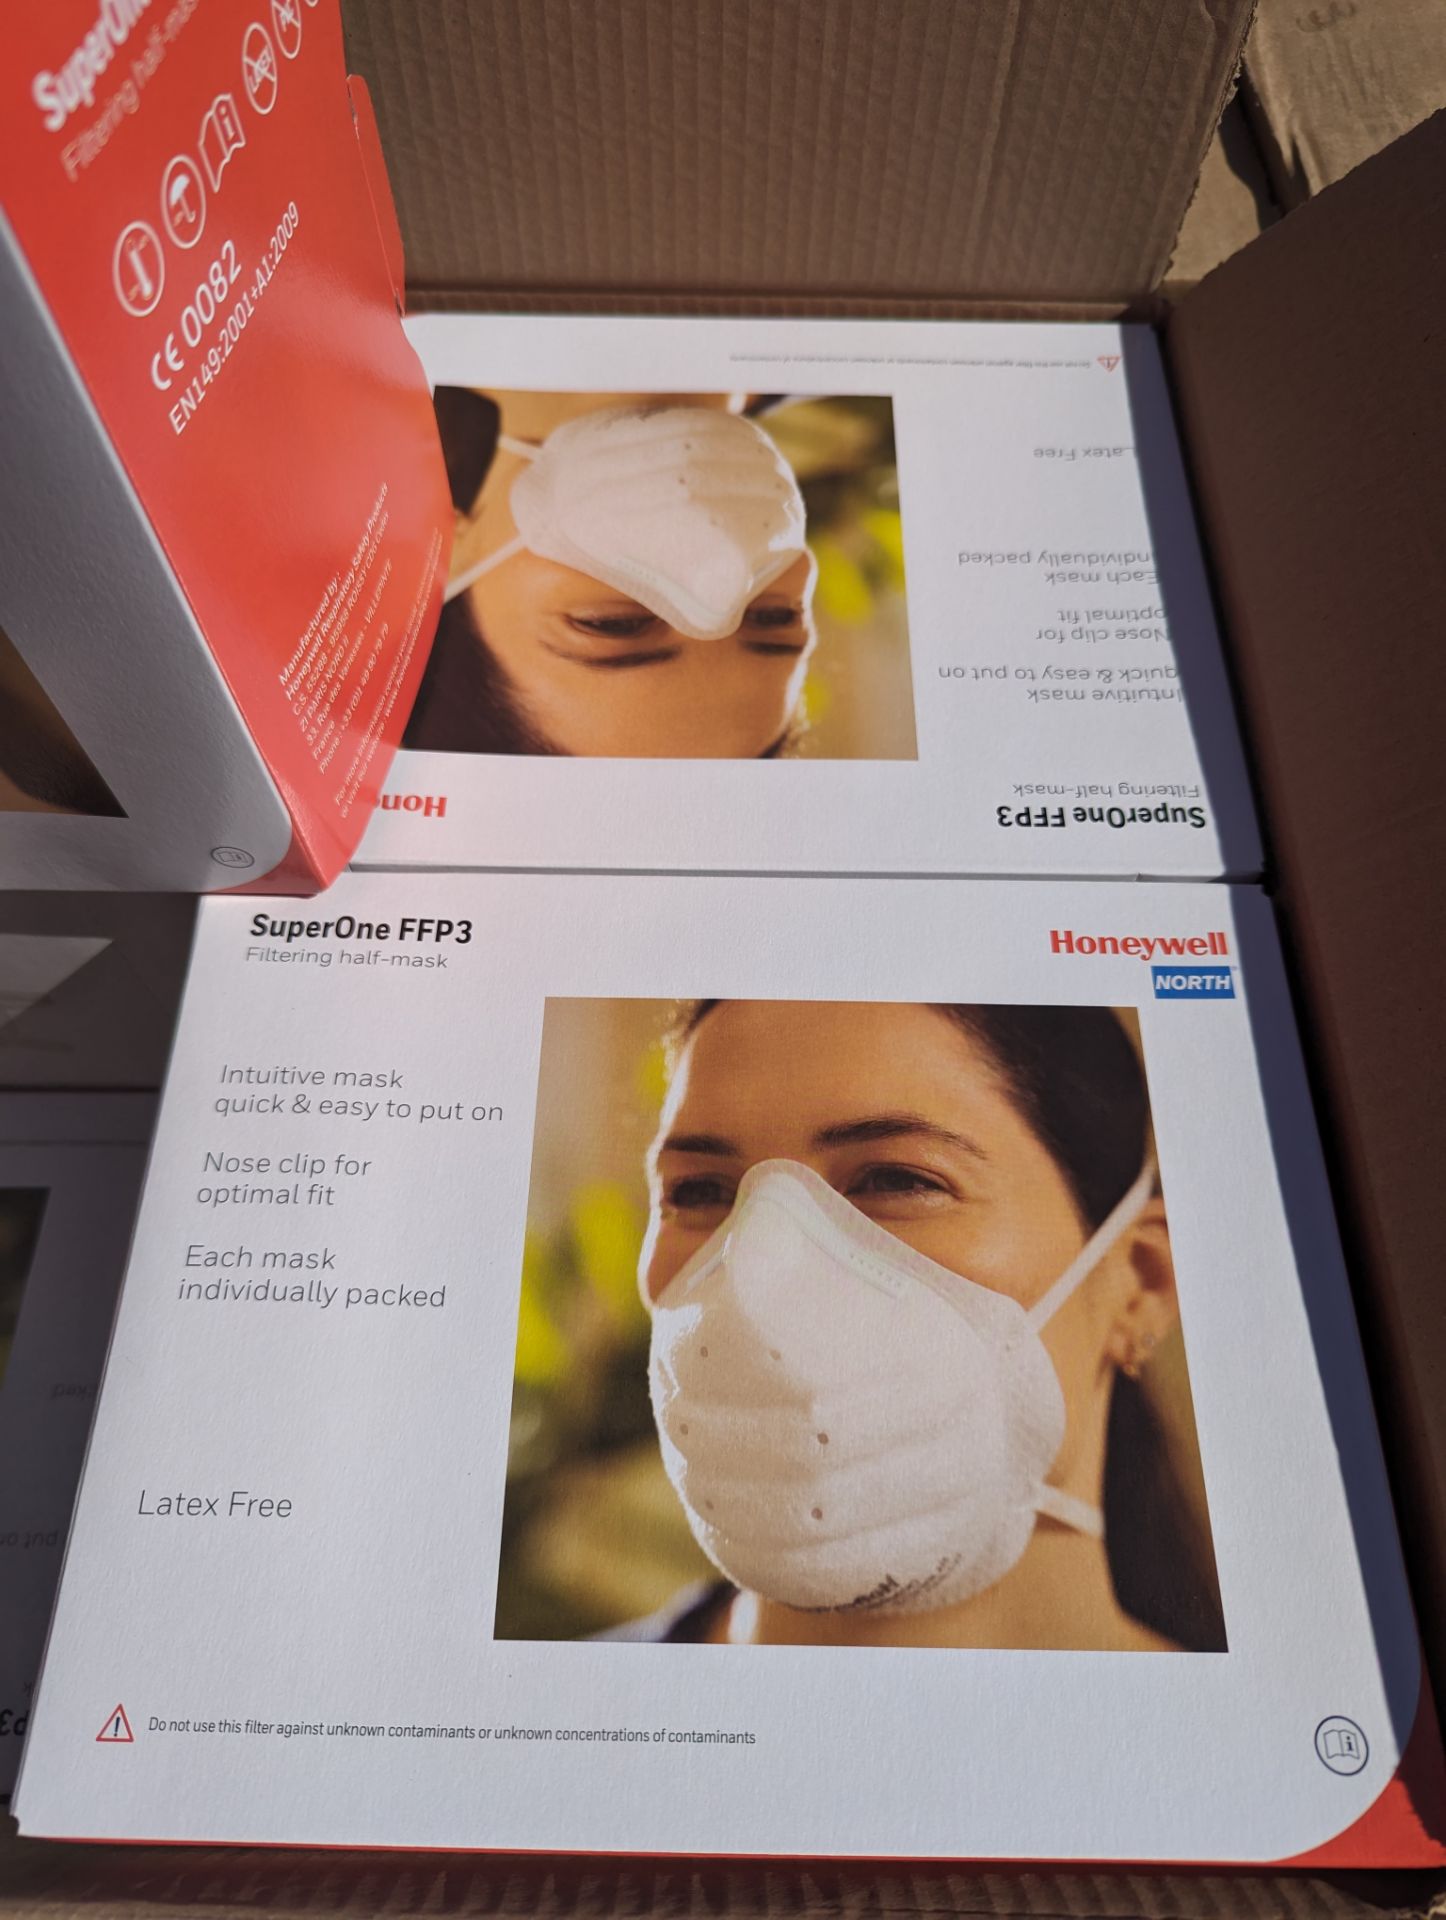 4x Boxes Honeywell SuperOne V2 ip2 FFP3 Filtering Masks - Image 2 of 3